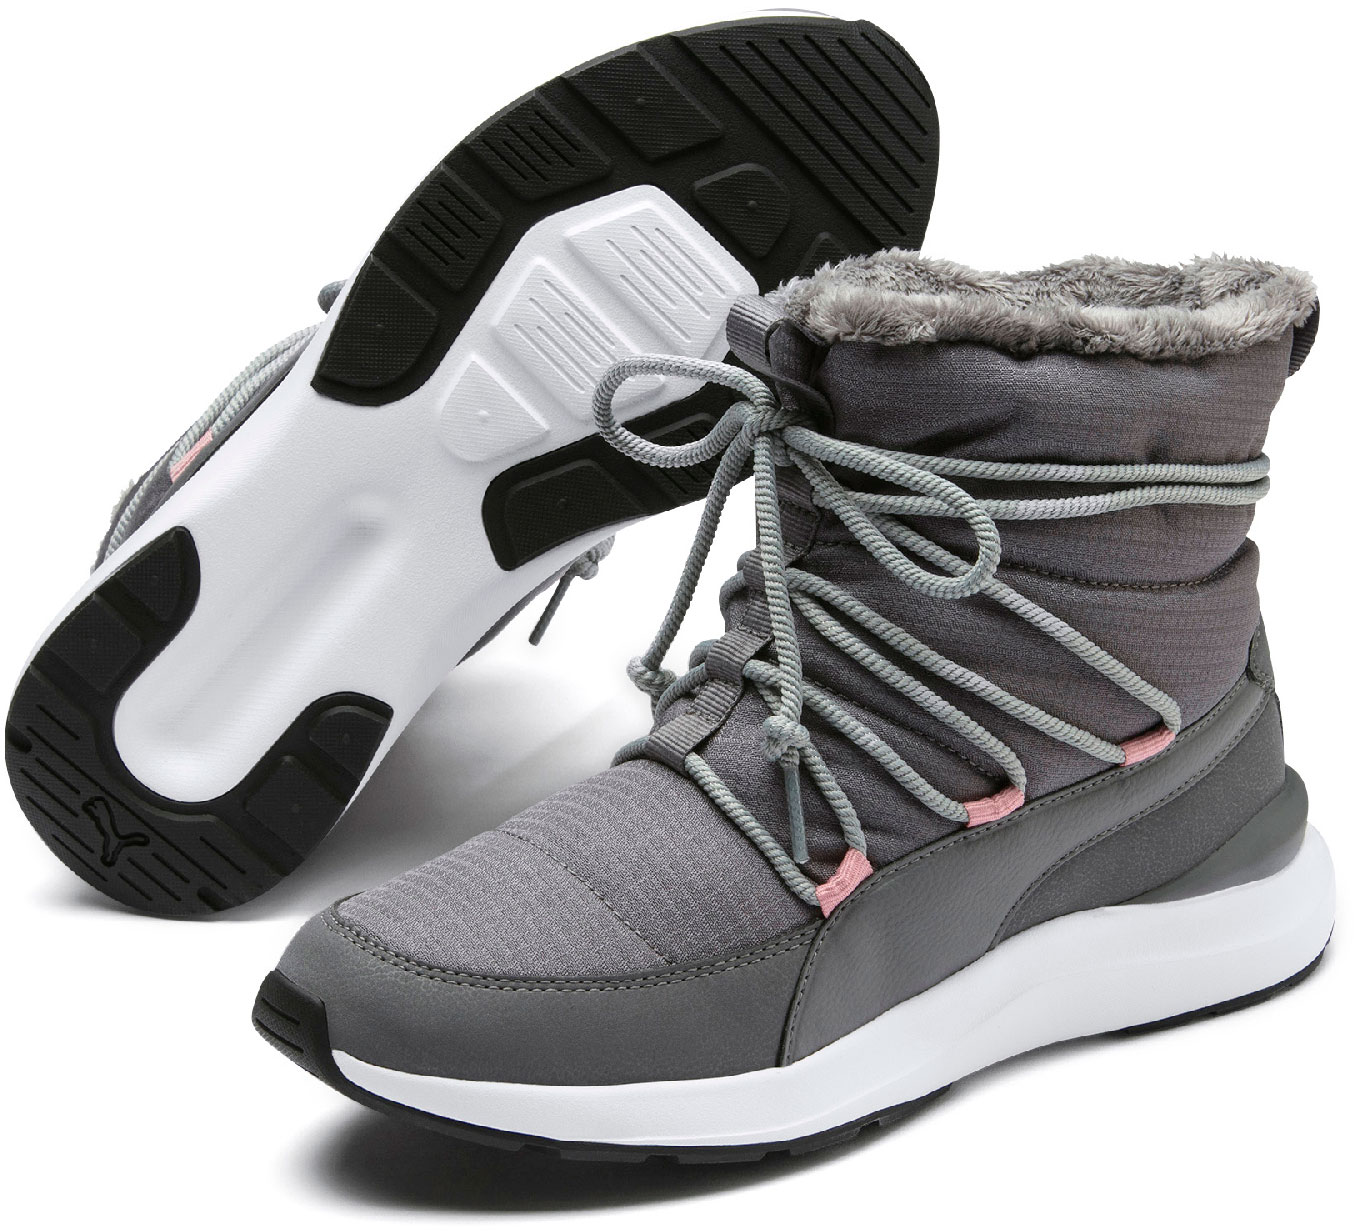 puma boots winter